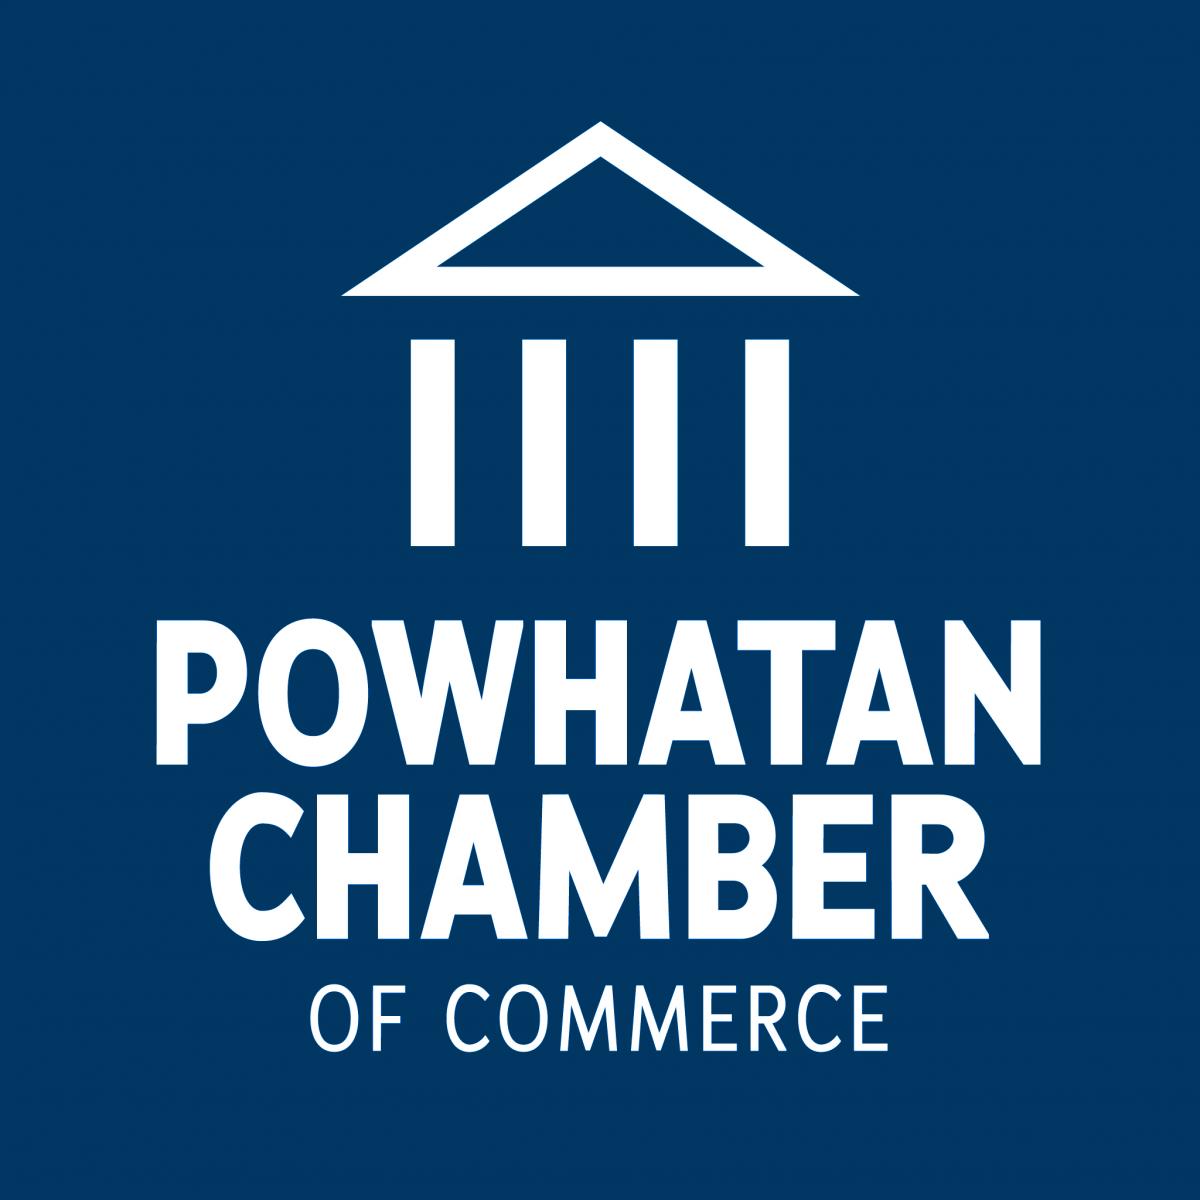 Powhatan Chamber of Commerce